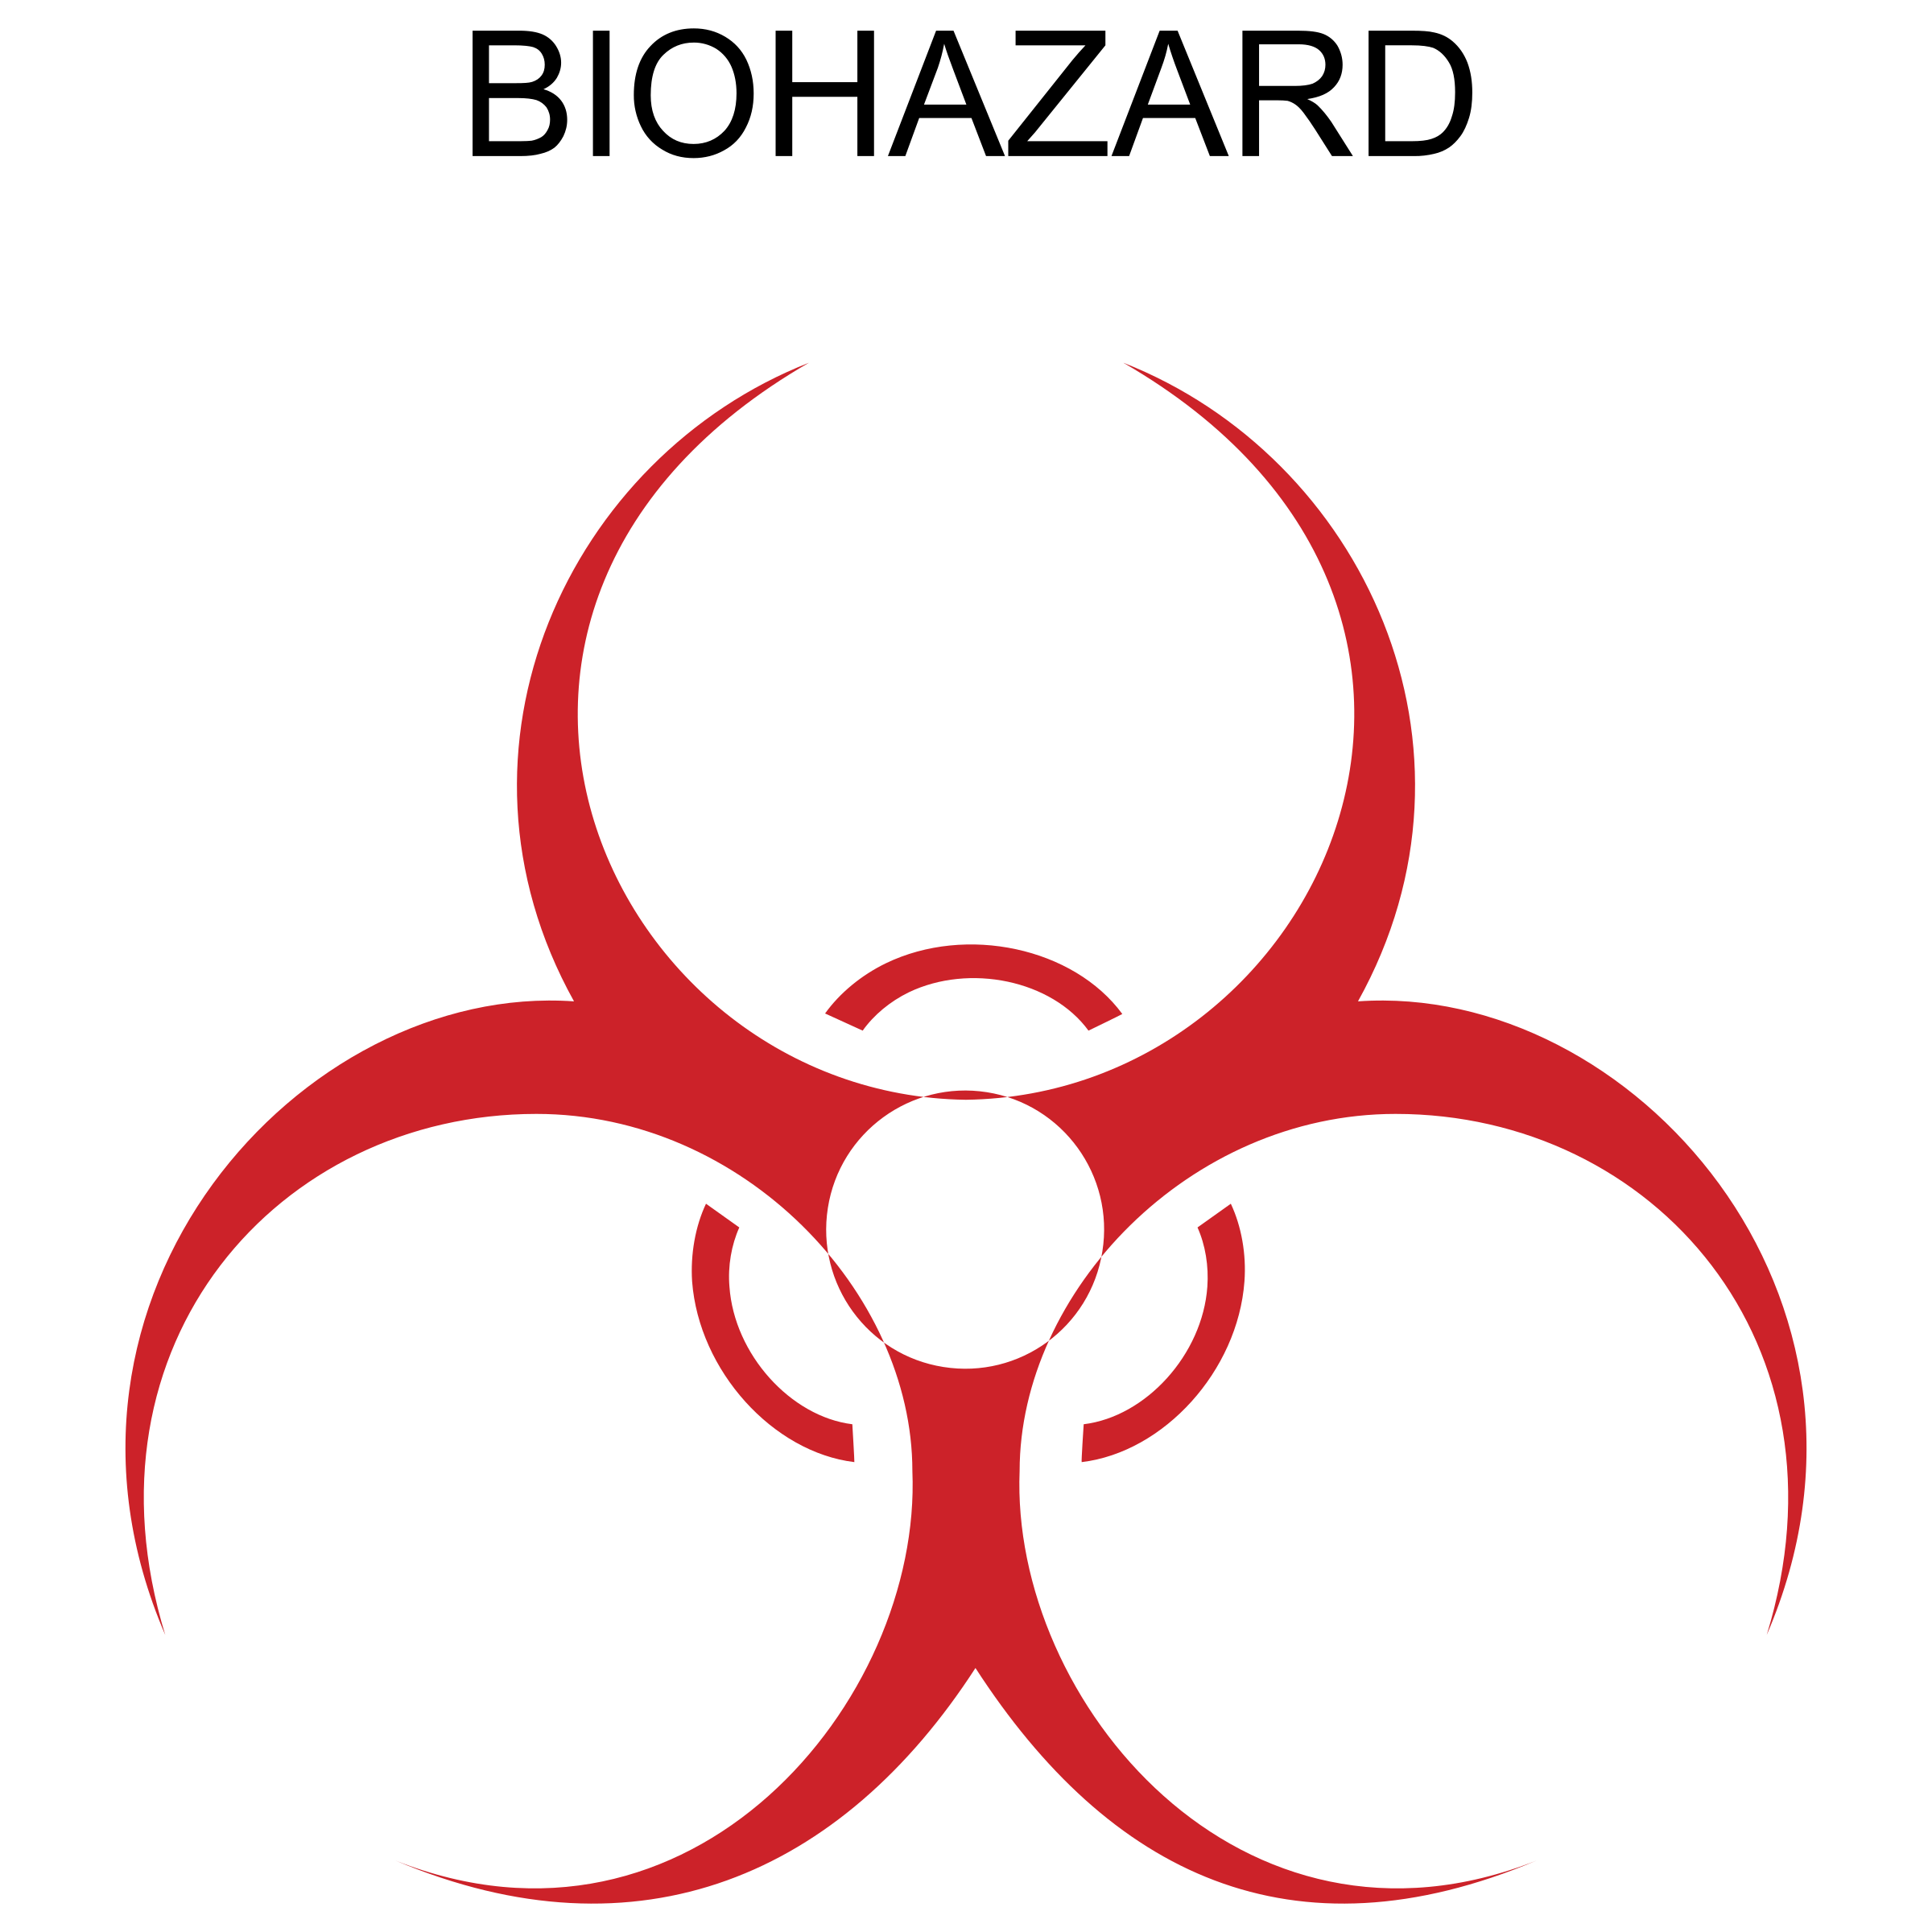 Biohazard Symbol PNG HD Quality